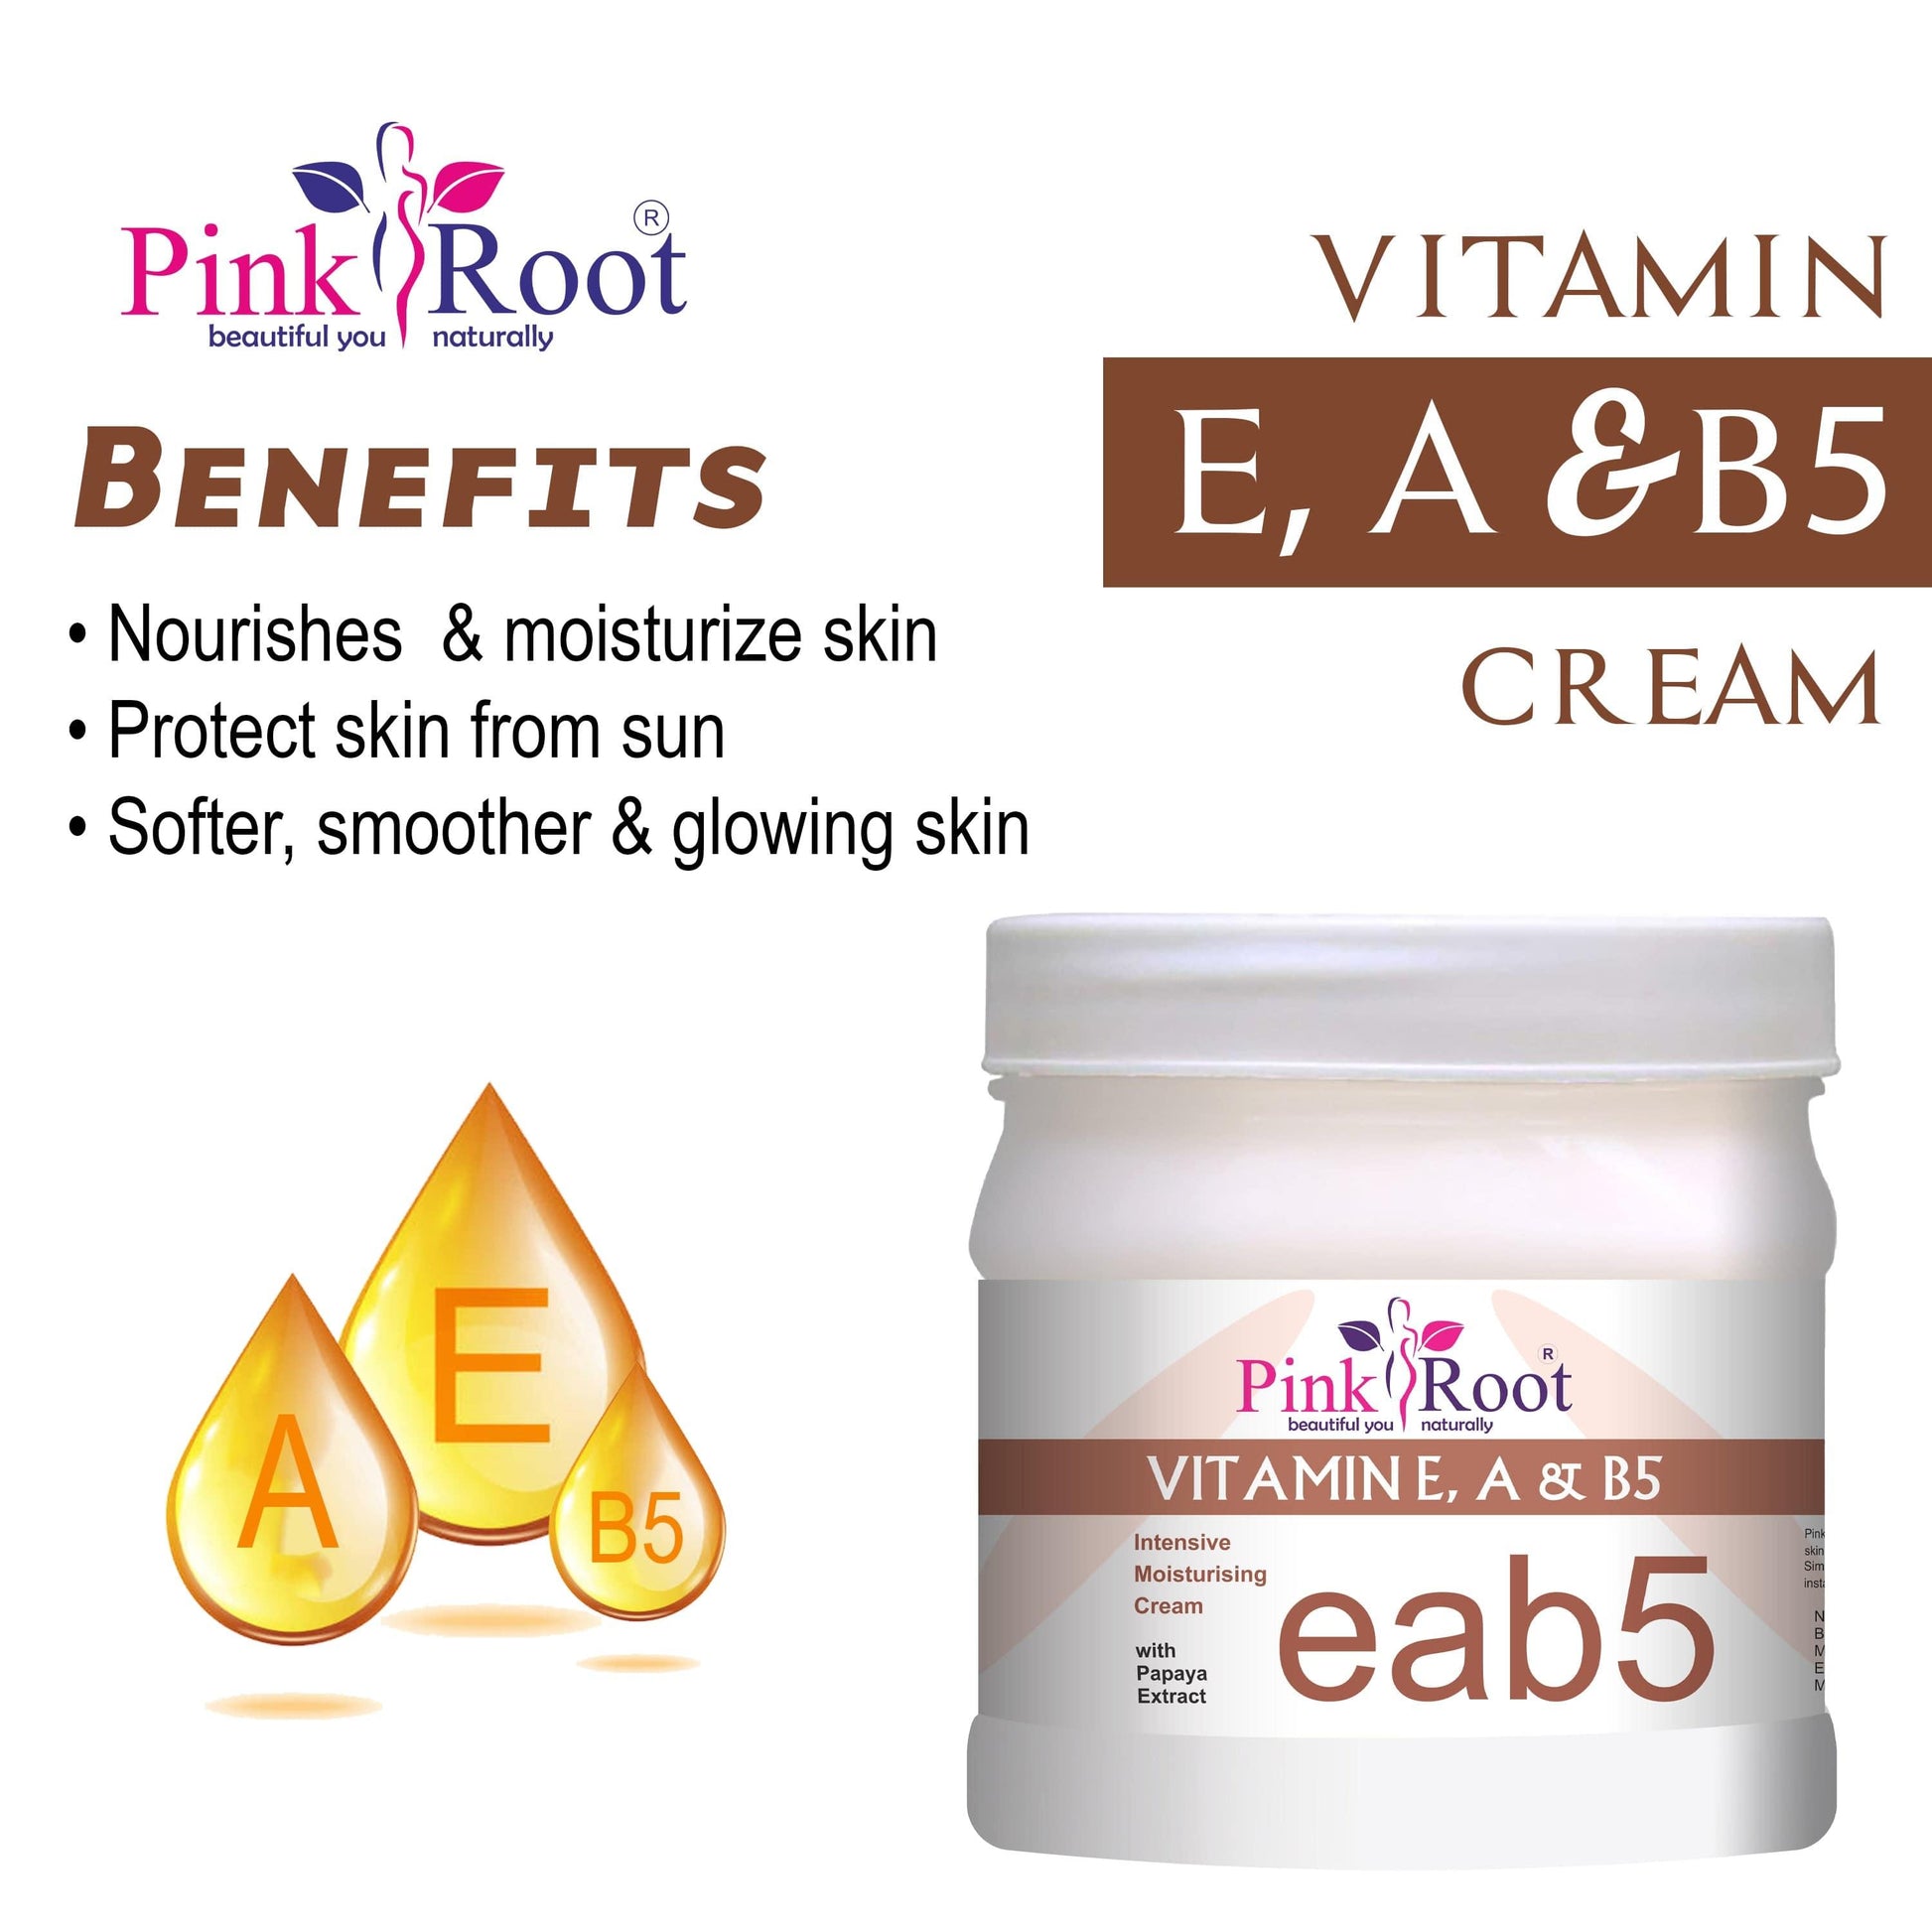 Vitamine E, A & B5 Intensive Moisturising Cream 500ml - Pink Root